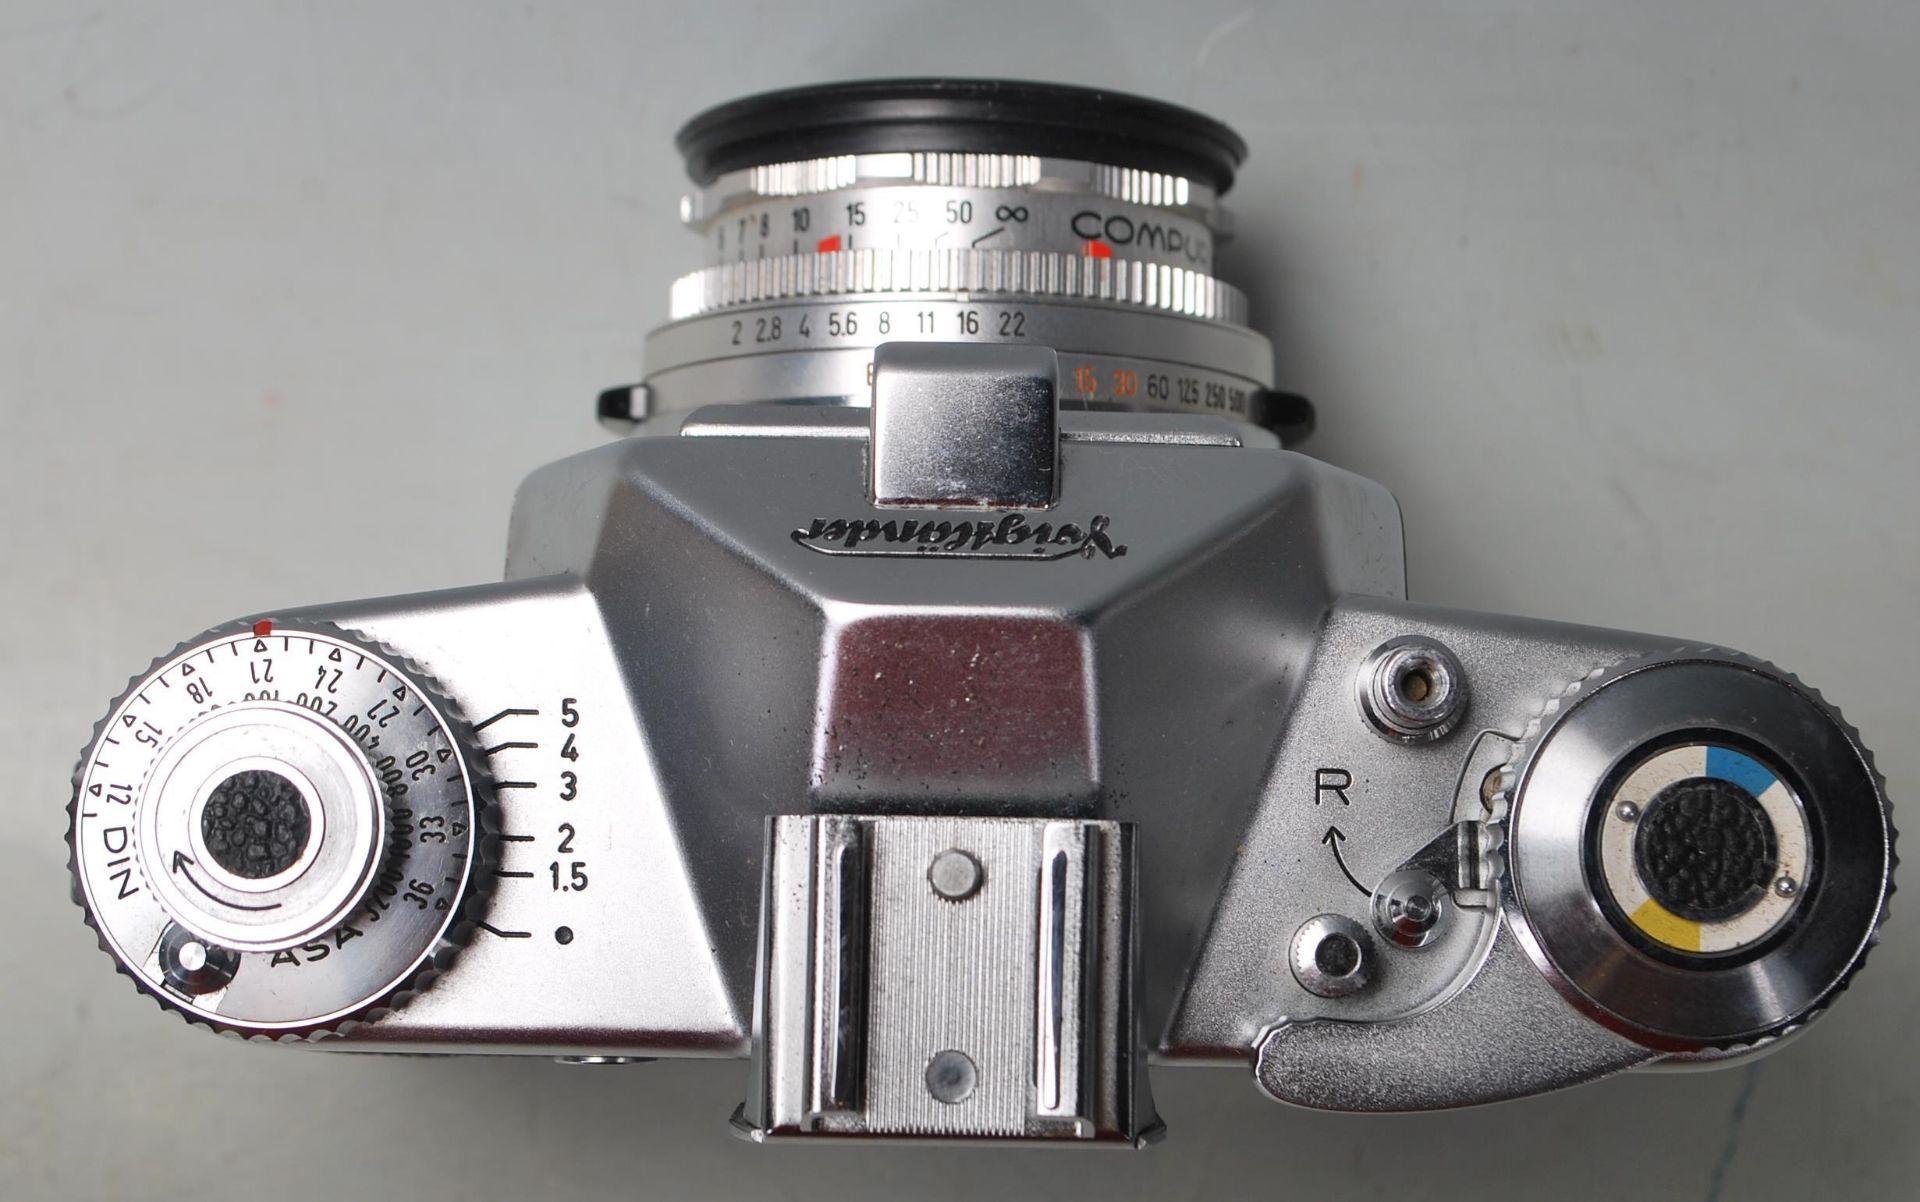 A vintage German Voigtländer camera along with spare lenses to include Nikkor S C auto 1:1.4 f= - Bild 3 aus 14